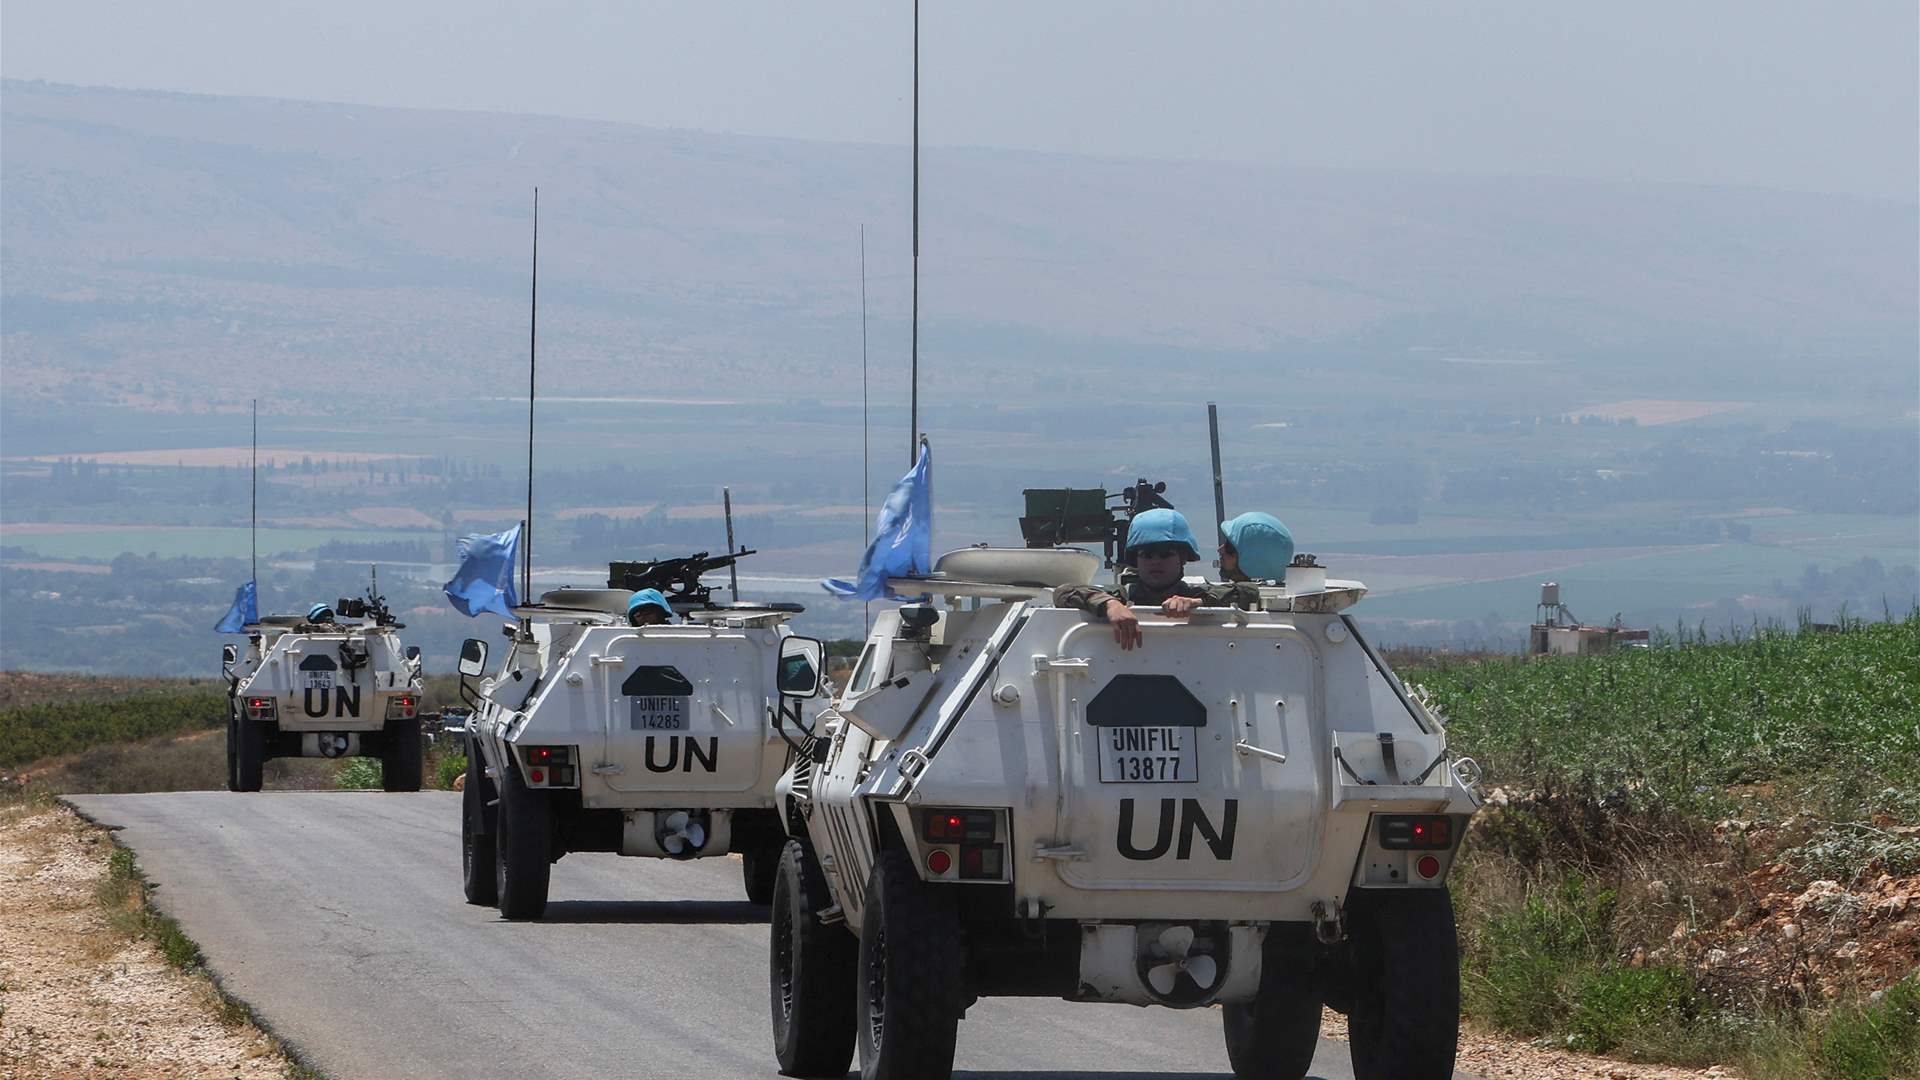 Andrea Tenenti addresses rumors, ensures UNIFIL&#39;s presence